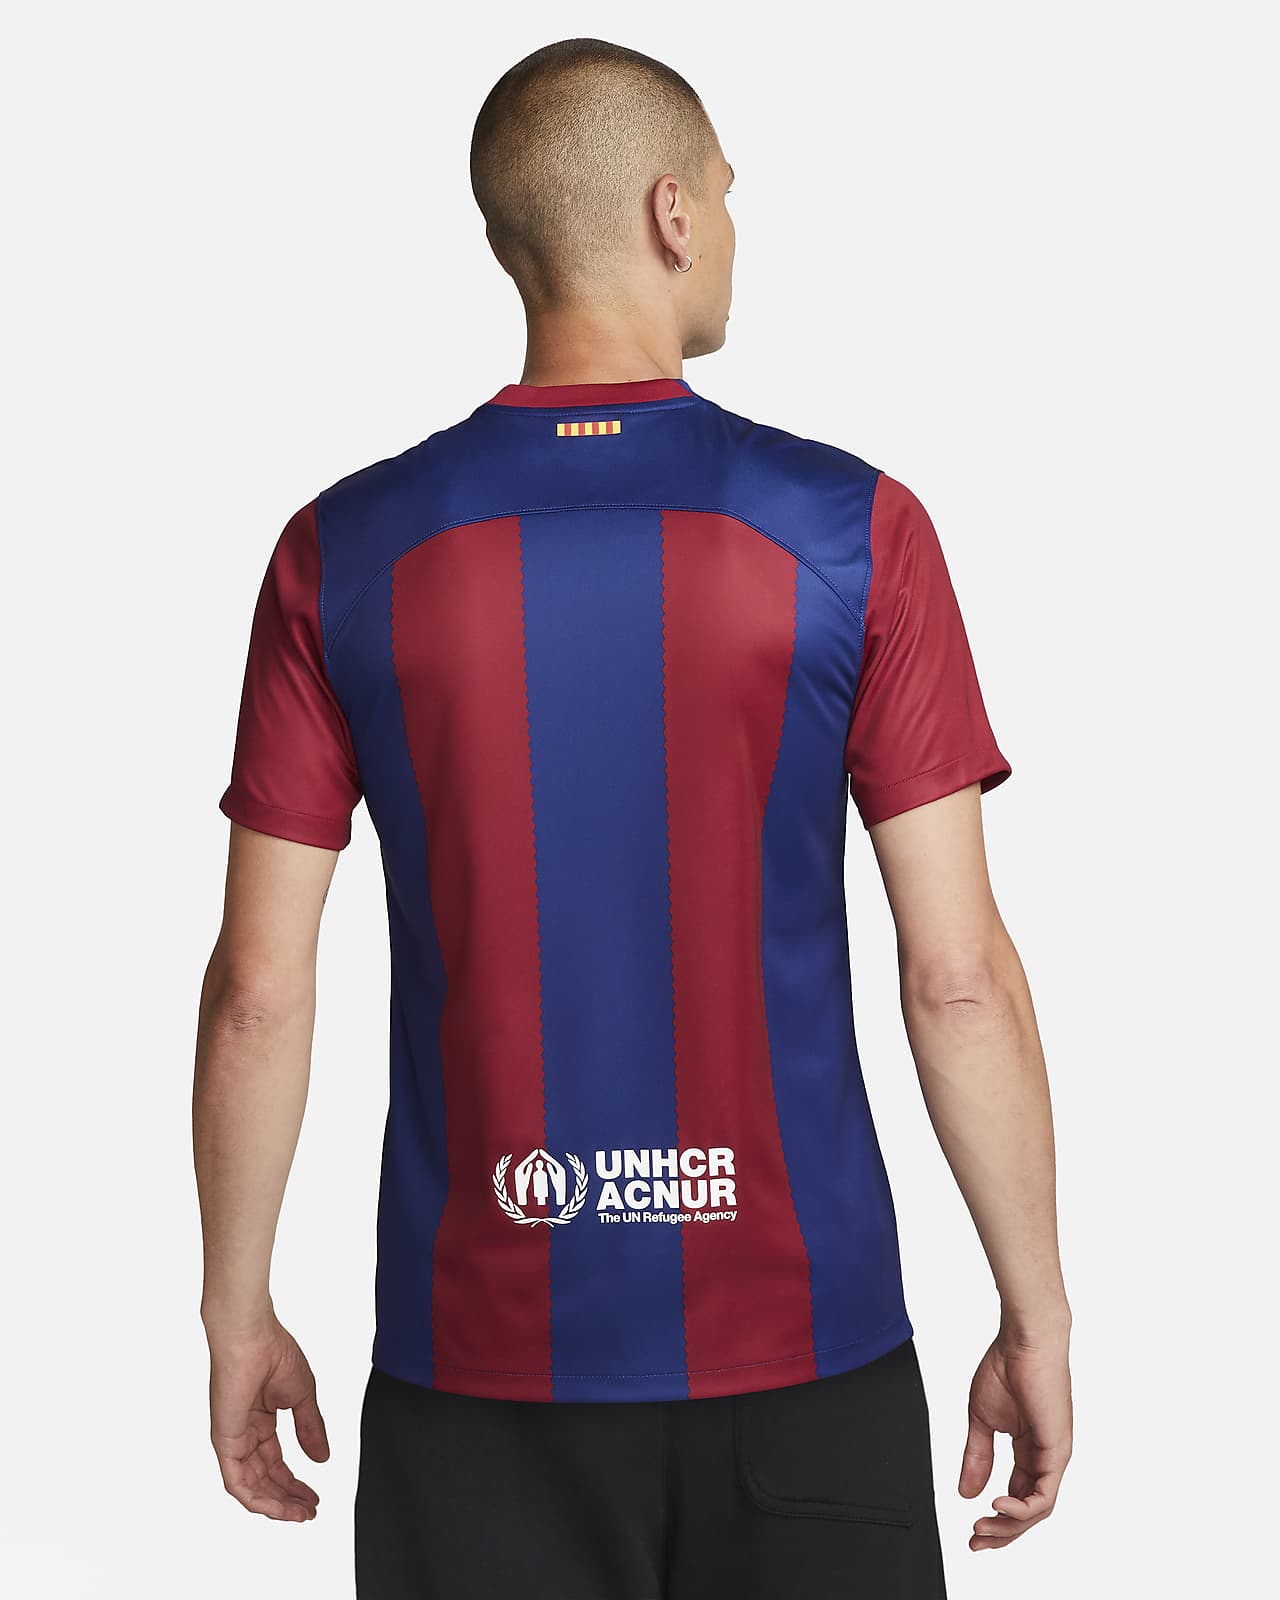 barcelona football club jersey